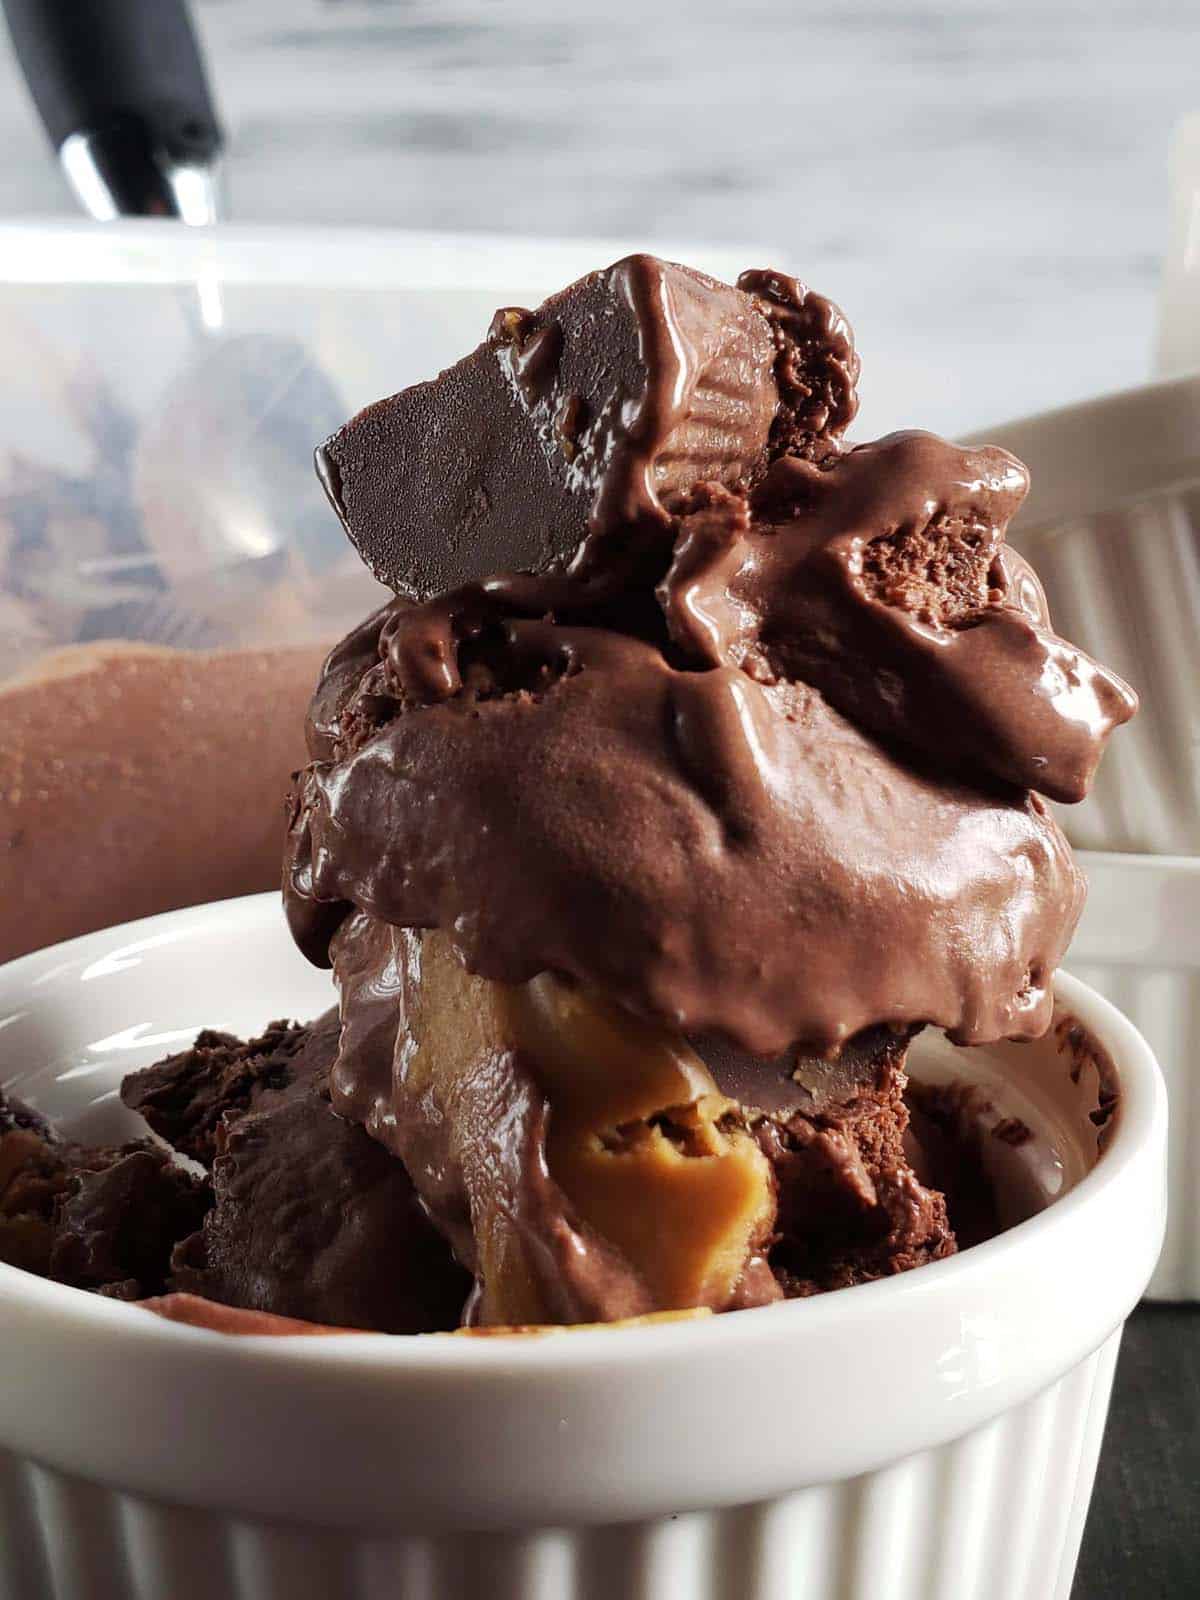 Chocolate peanut butter swirl ice cream in a white ramekin.